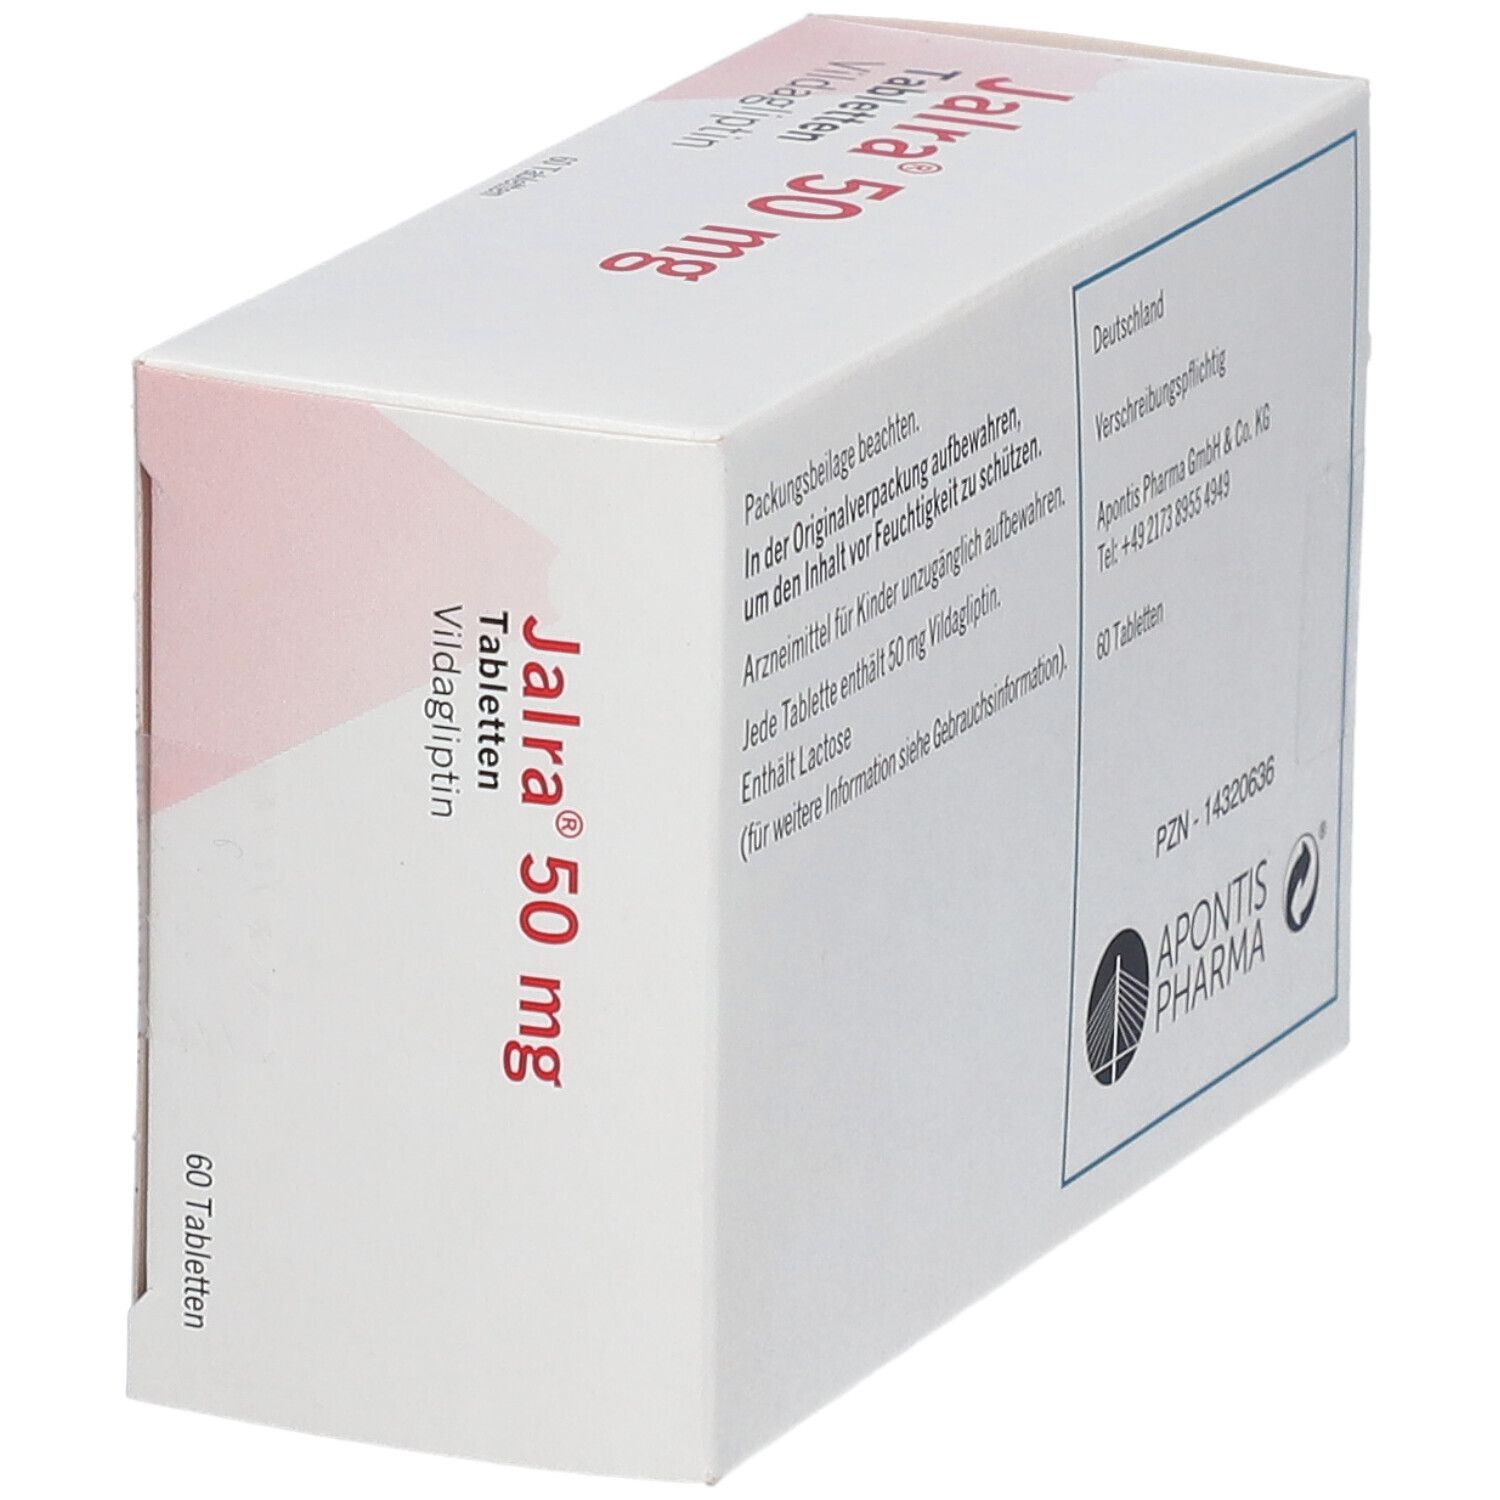 Jalra® 50 mg